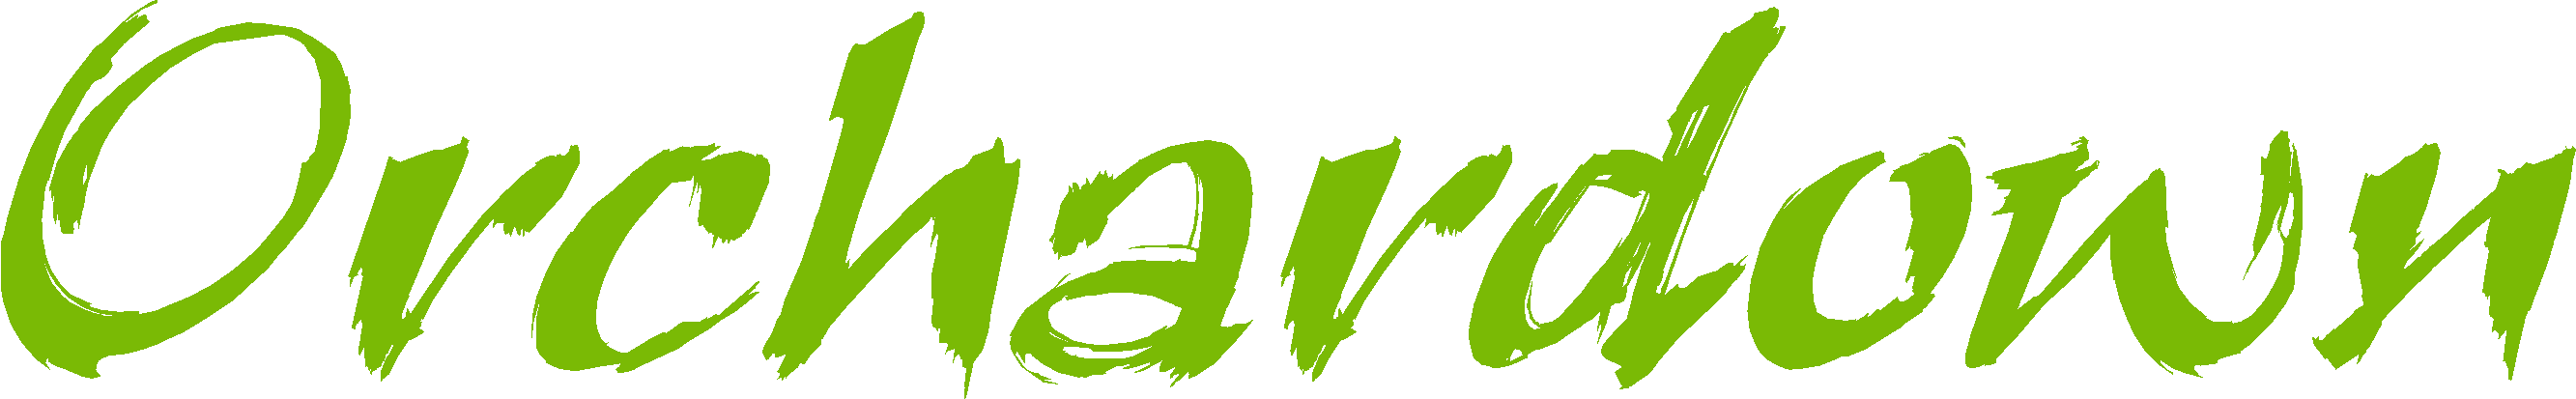 Orchardown green logo2